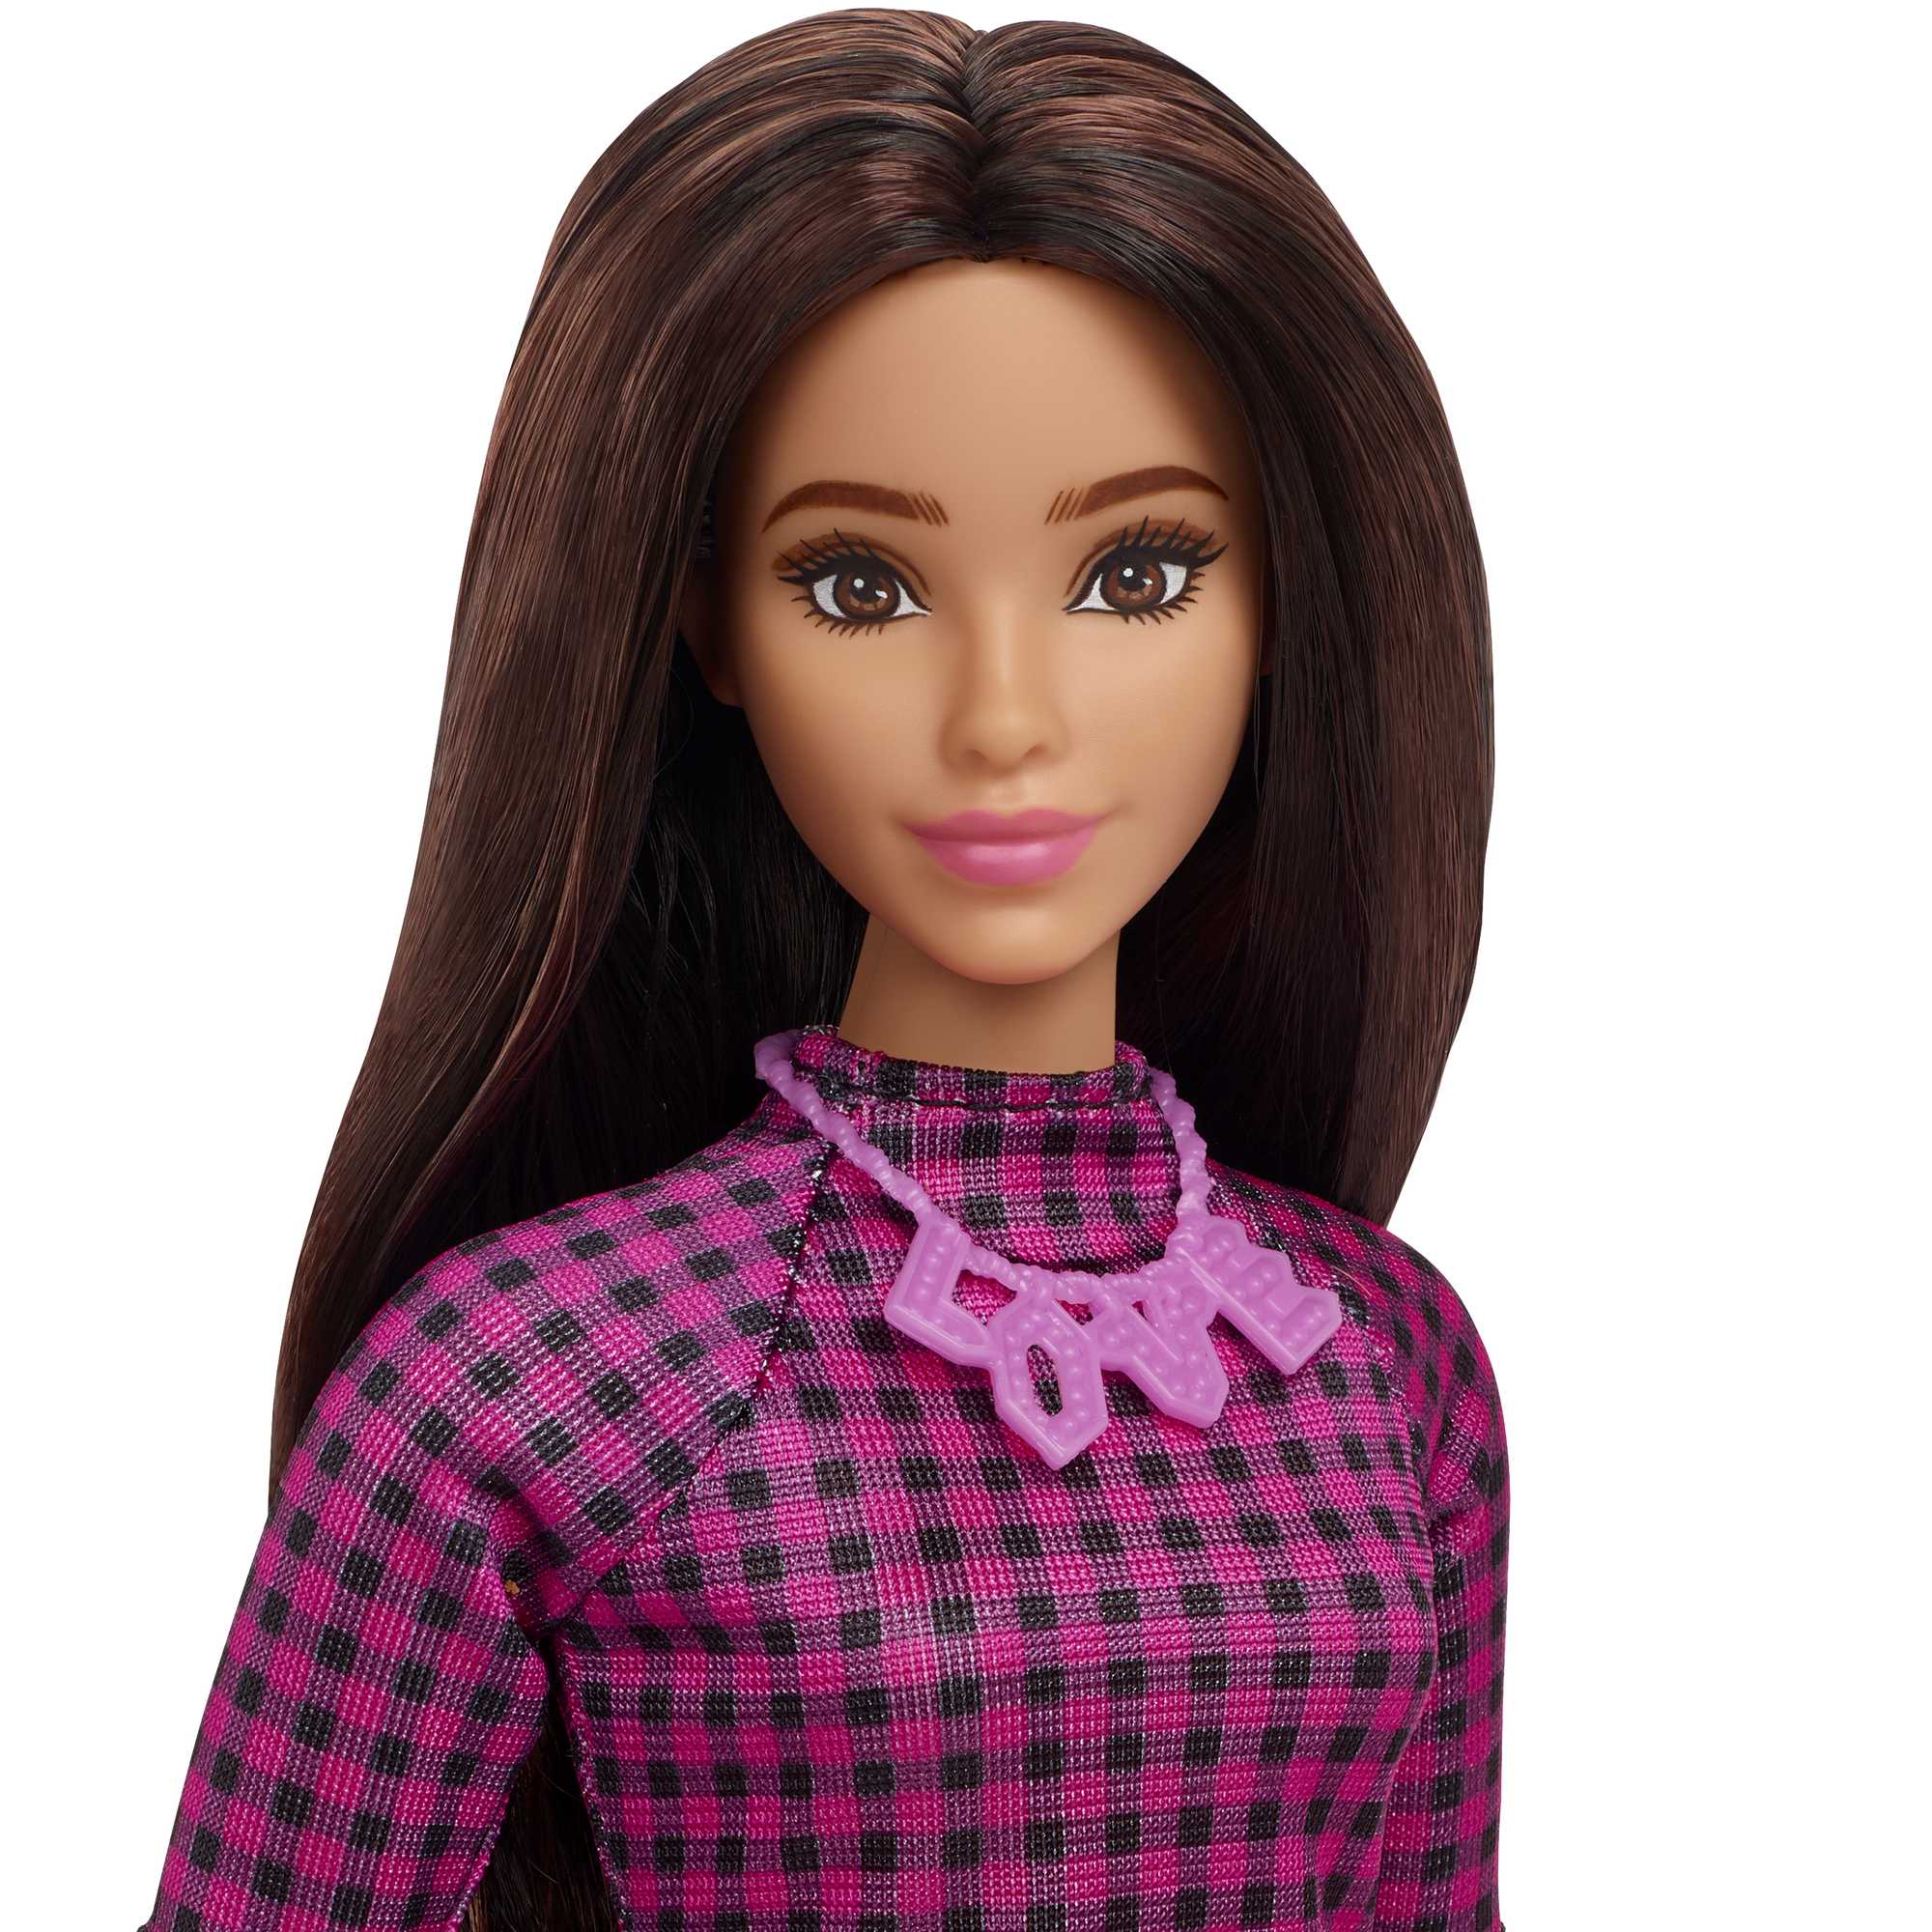 Barbie Doll Made to Move Curvy Superbe rousse Mattel Algeria